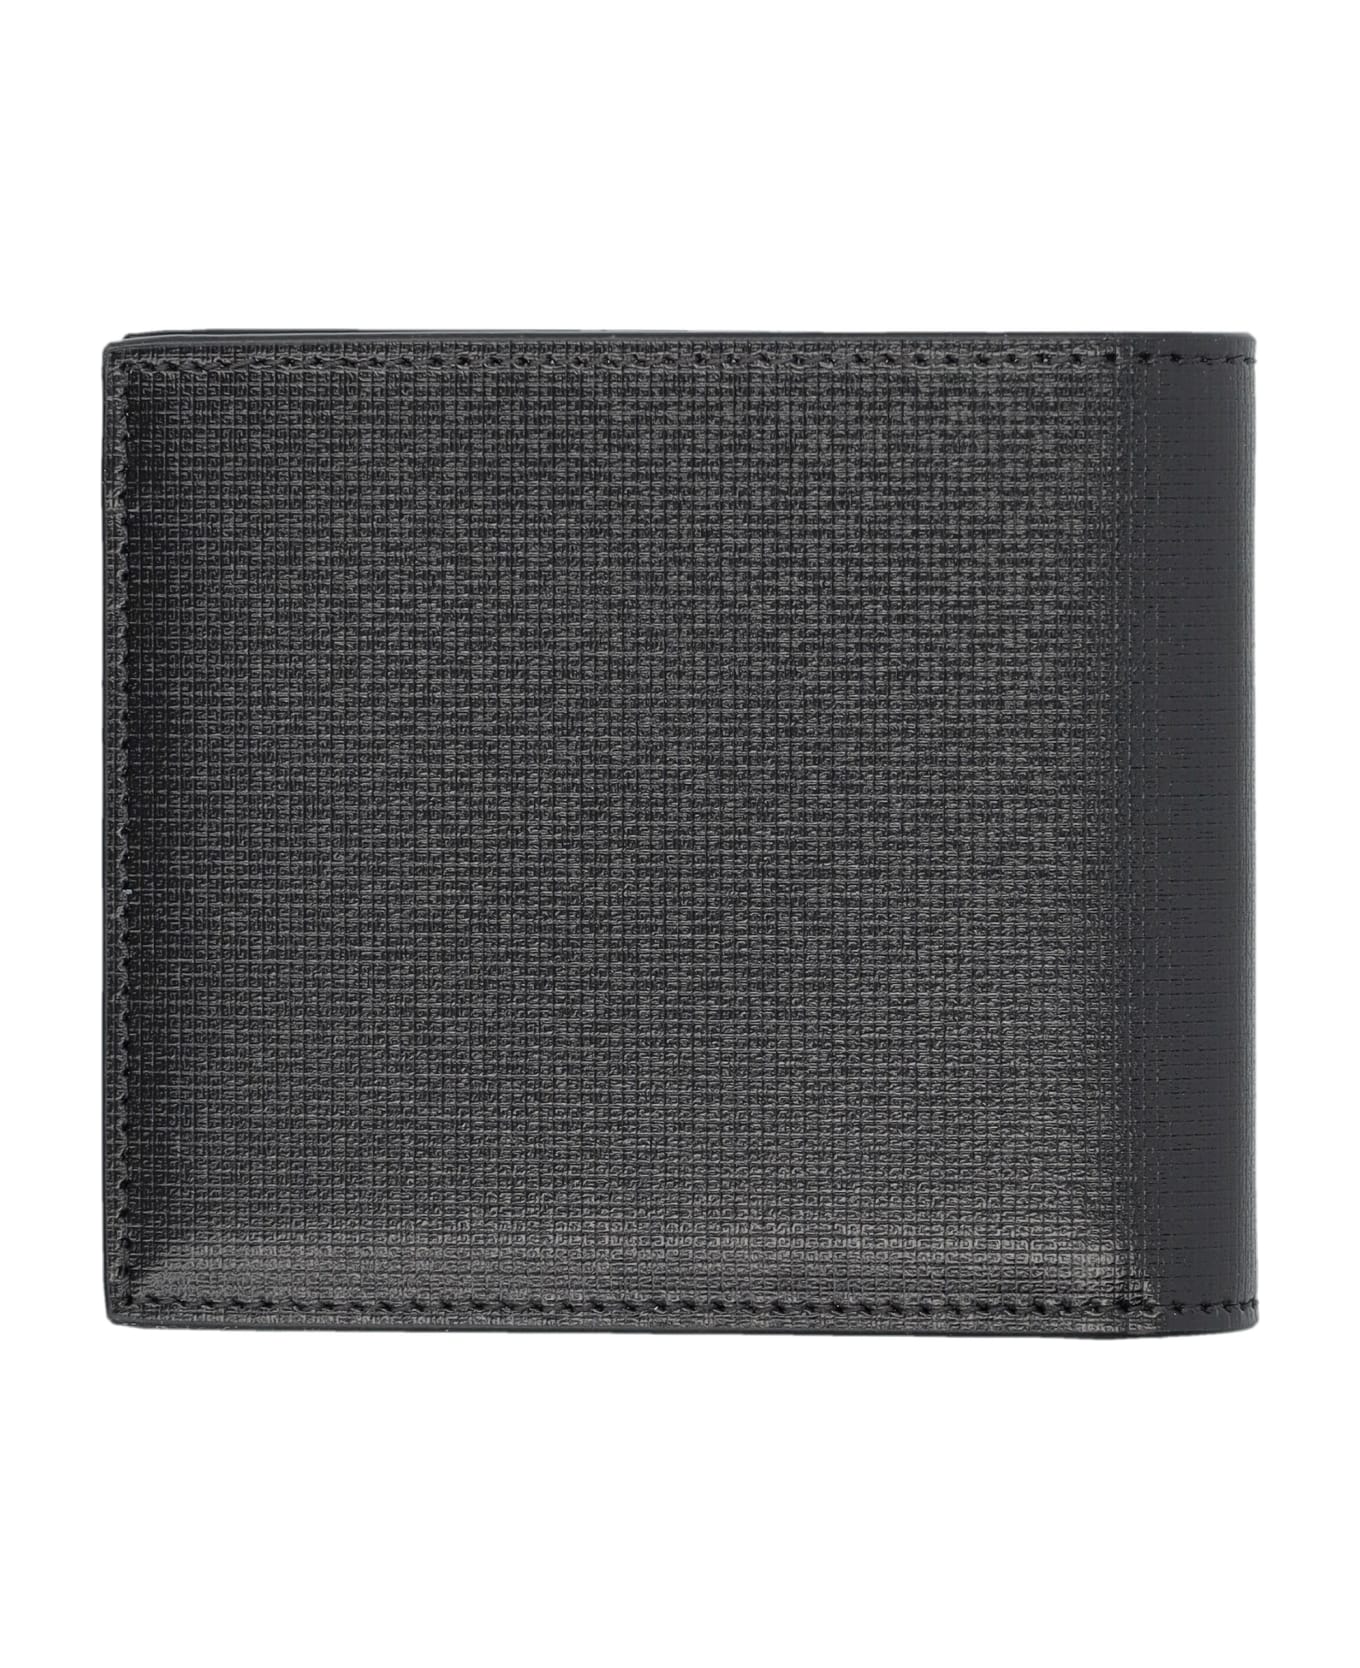 Givenchy 8cc Billfold Wallet - BLACK